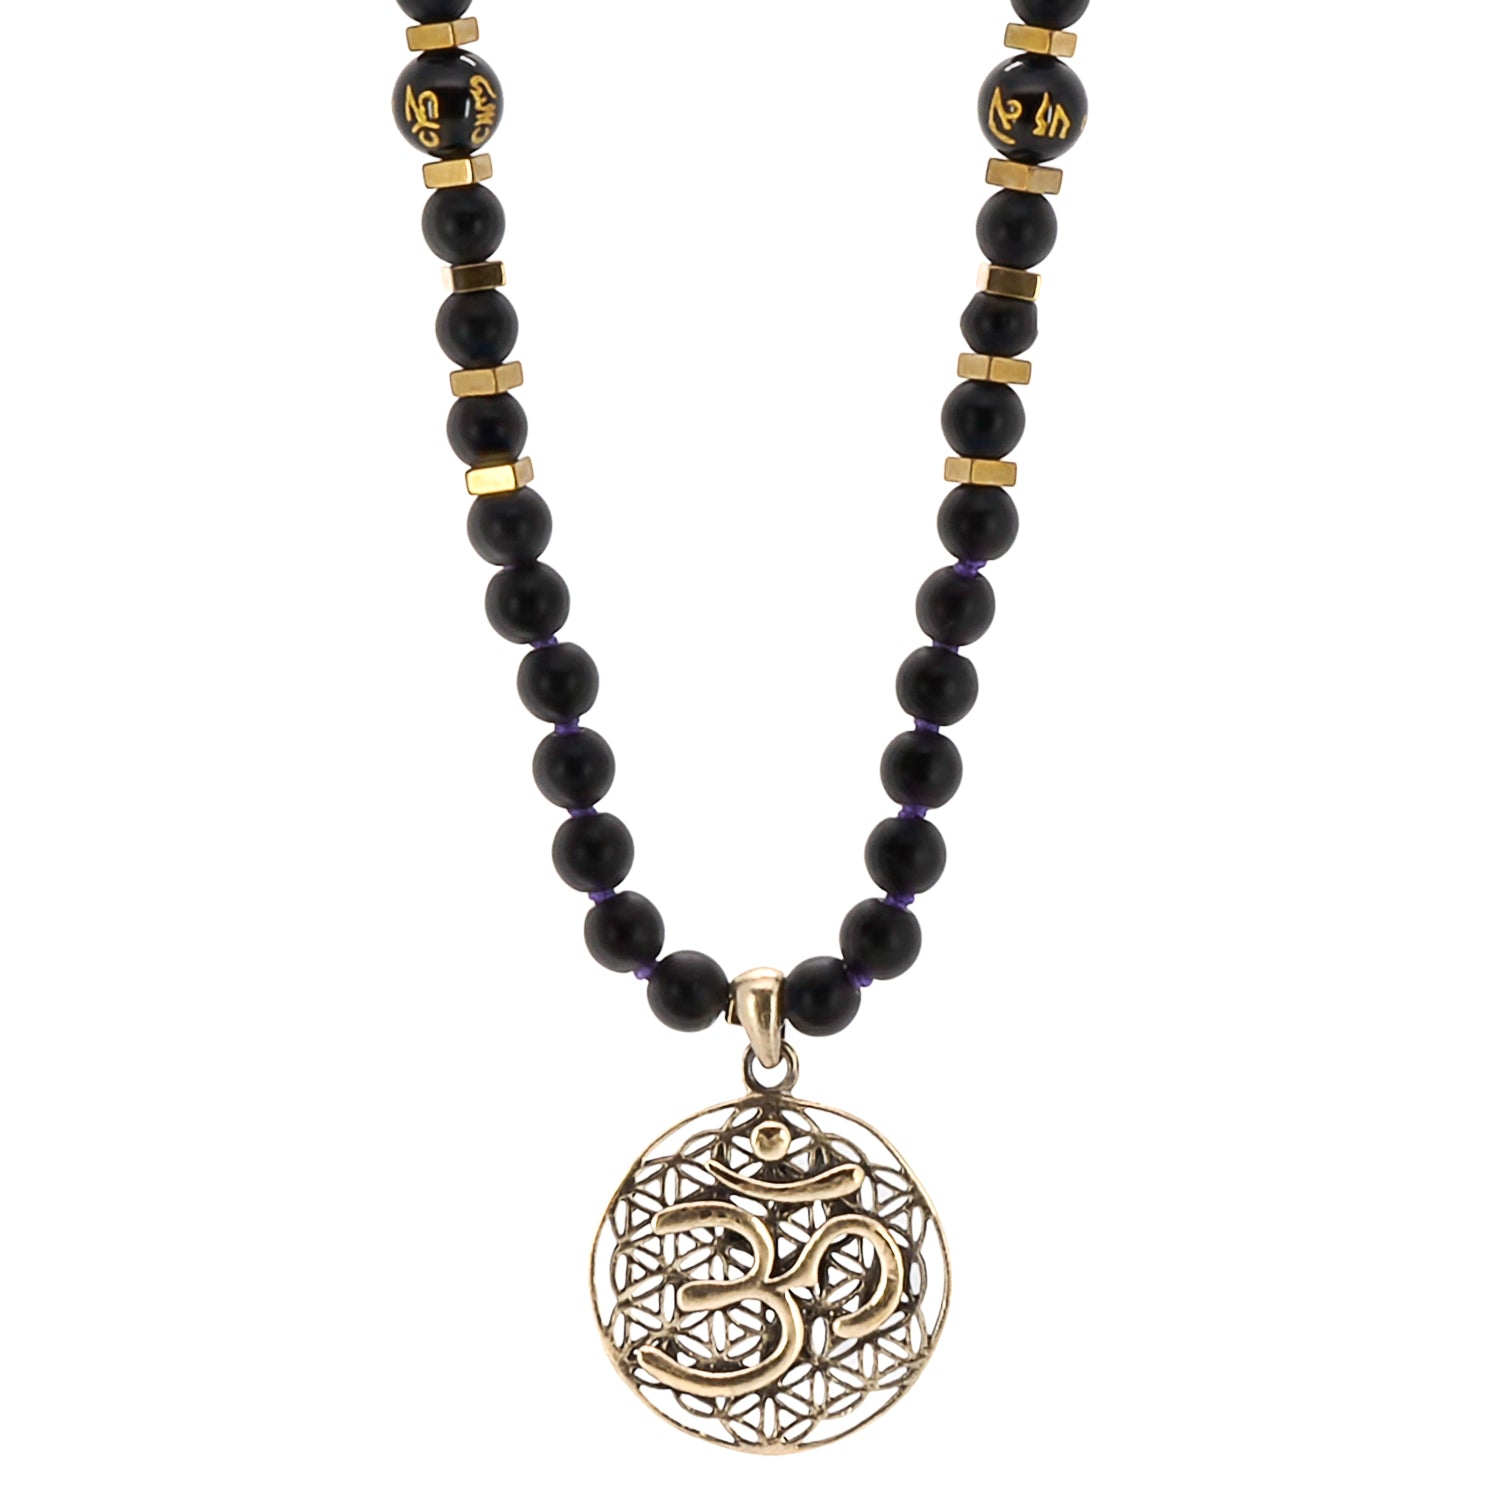 A close-up of the Spiritual Yoga Mala Onyx Necklace, showcasing its black onyx stone beads